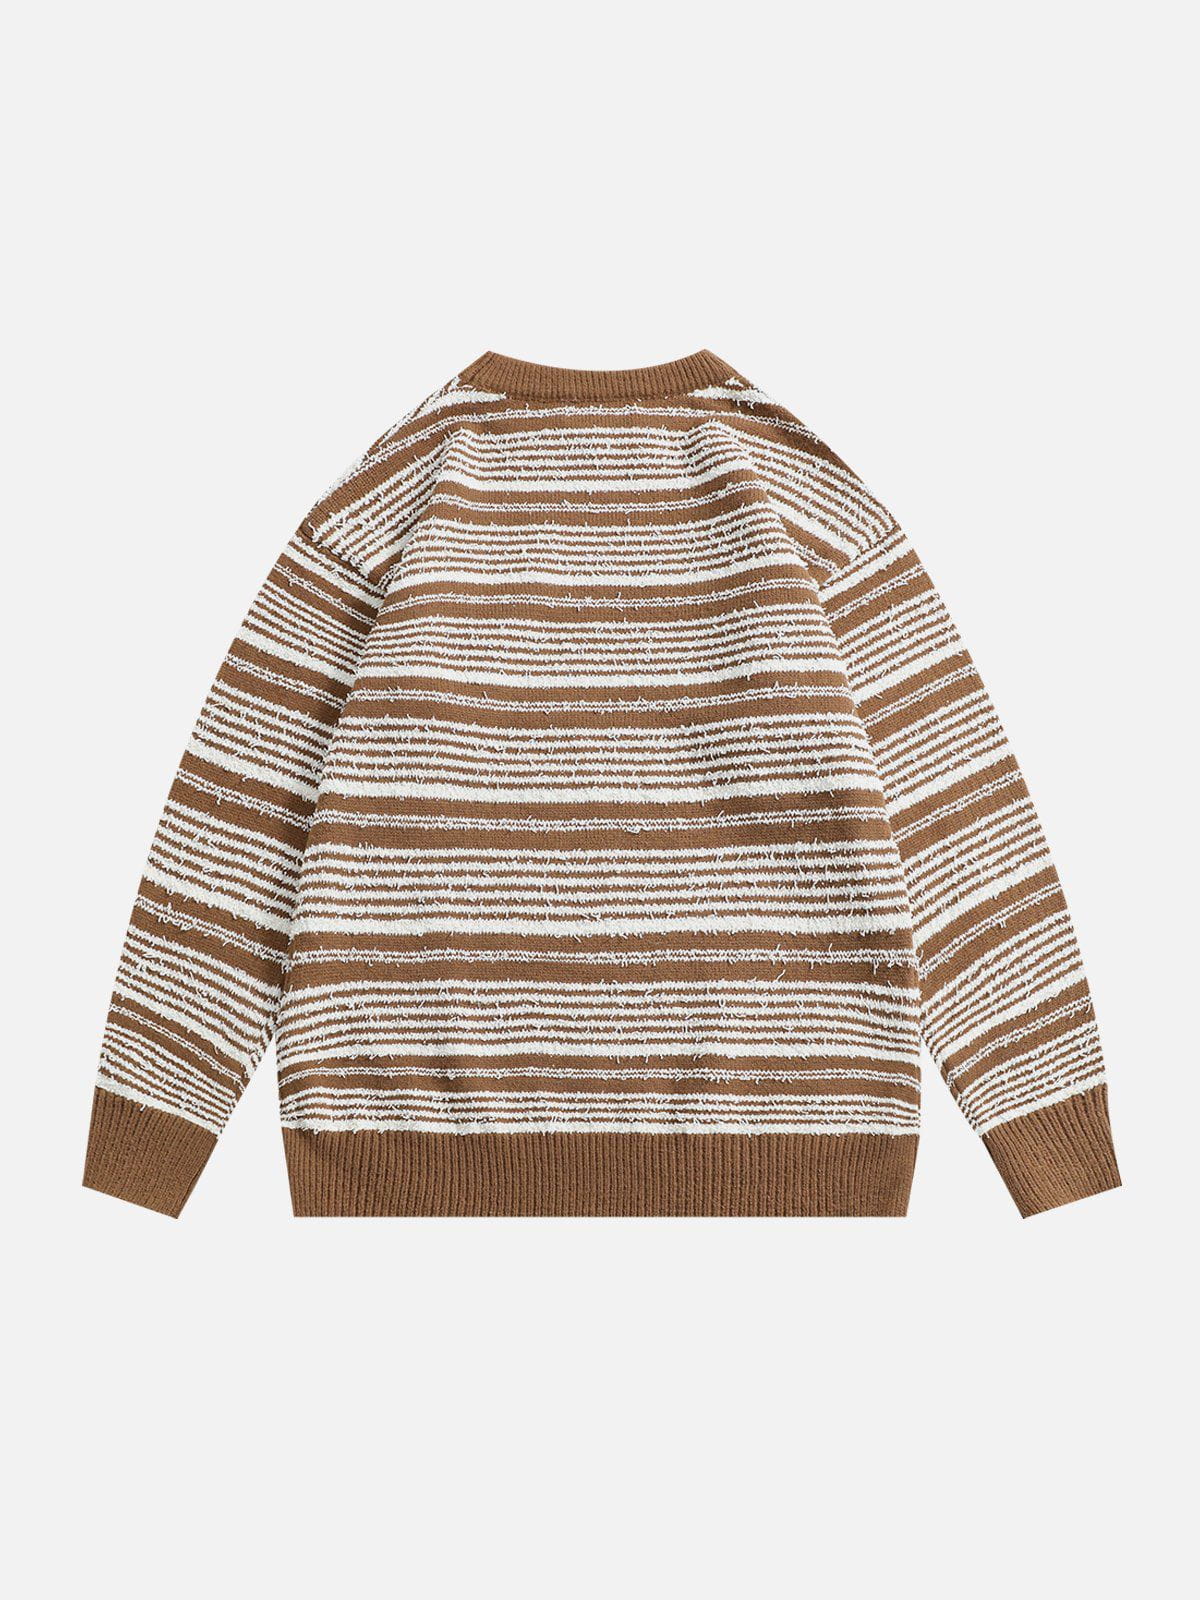 Majesda® - Vintage Stripe Design Sweater outfit ideas streetwear fashion